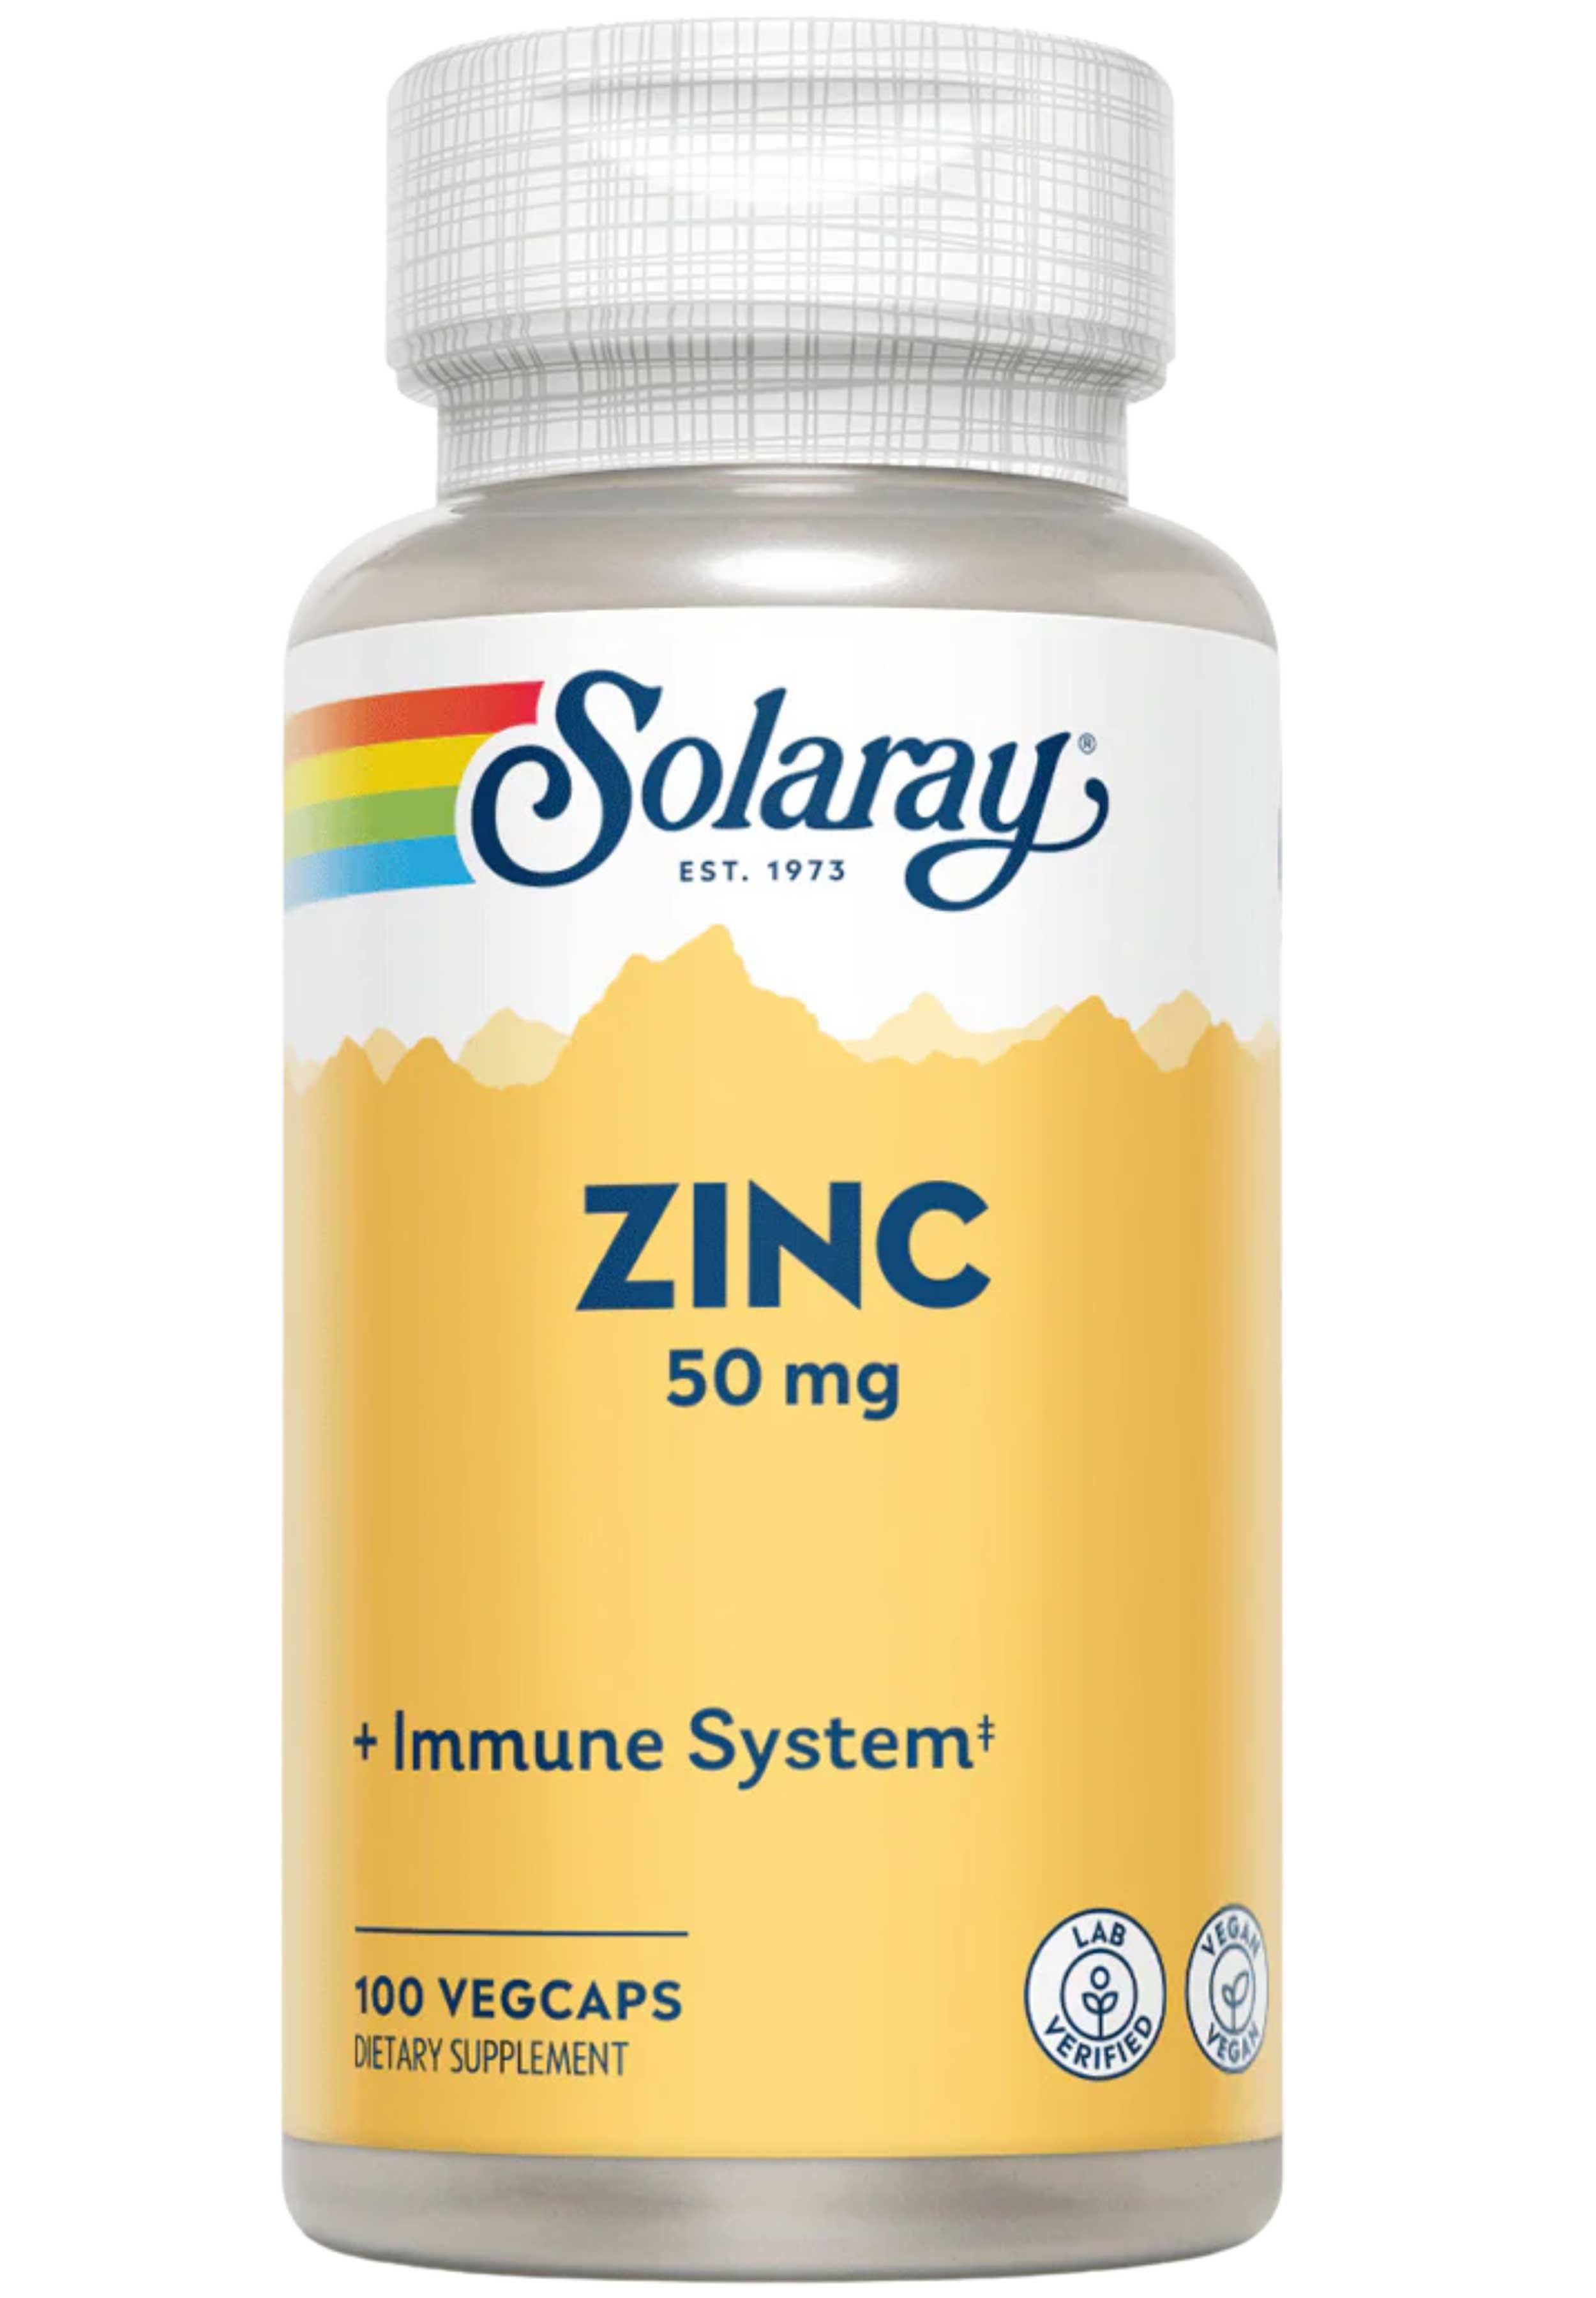 Solaray Dietary Supplement Zinc 50 MG